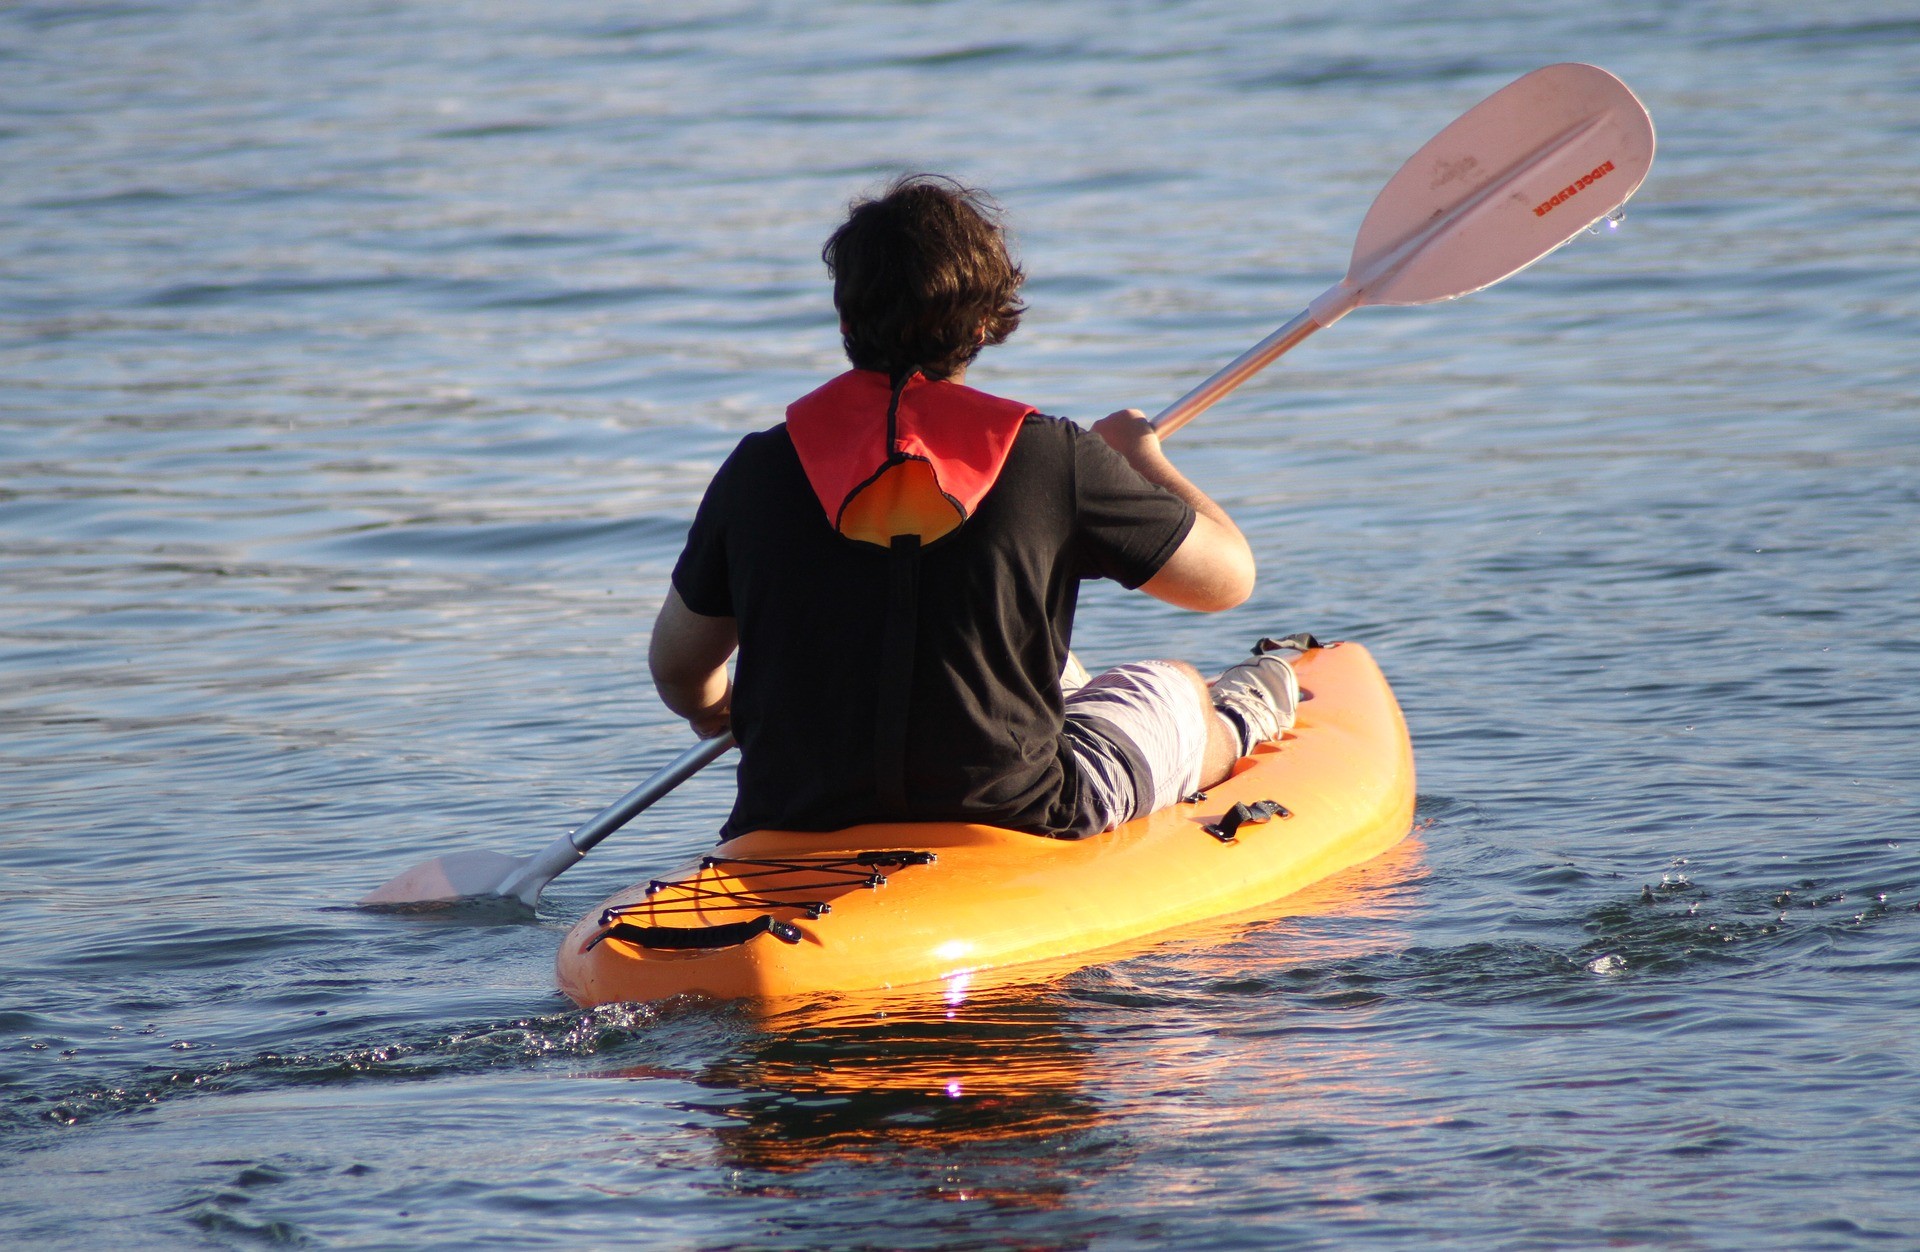 Lago Trasimeno - Noleggio barche a vela, a motore, gommoni, canoe e kayak